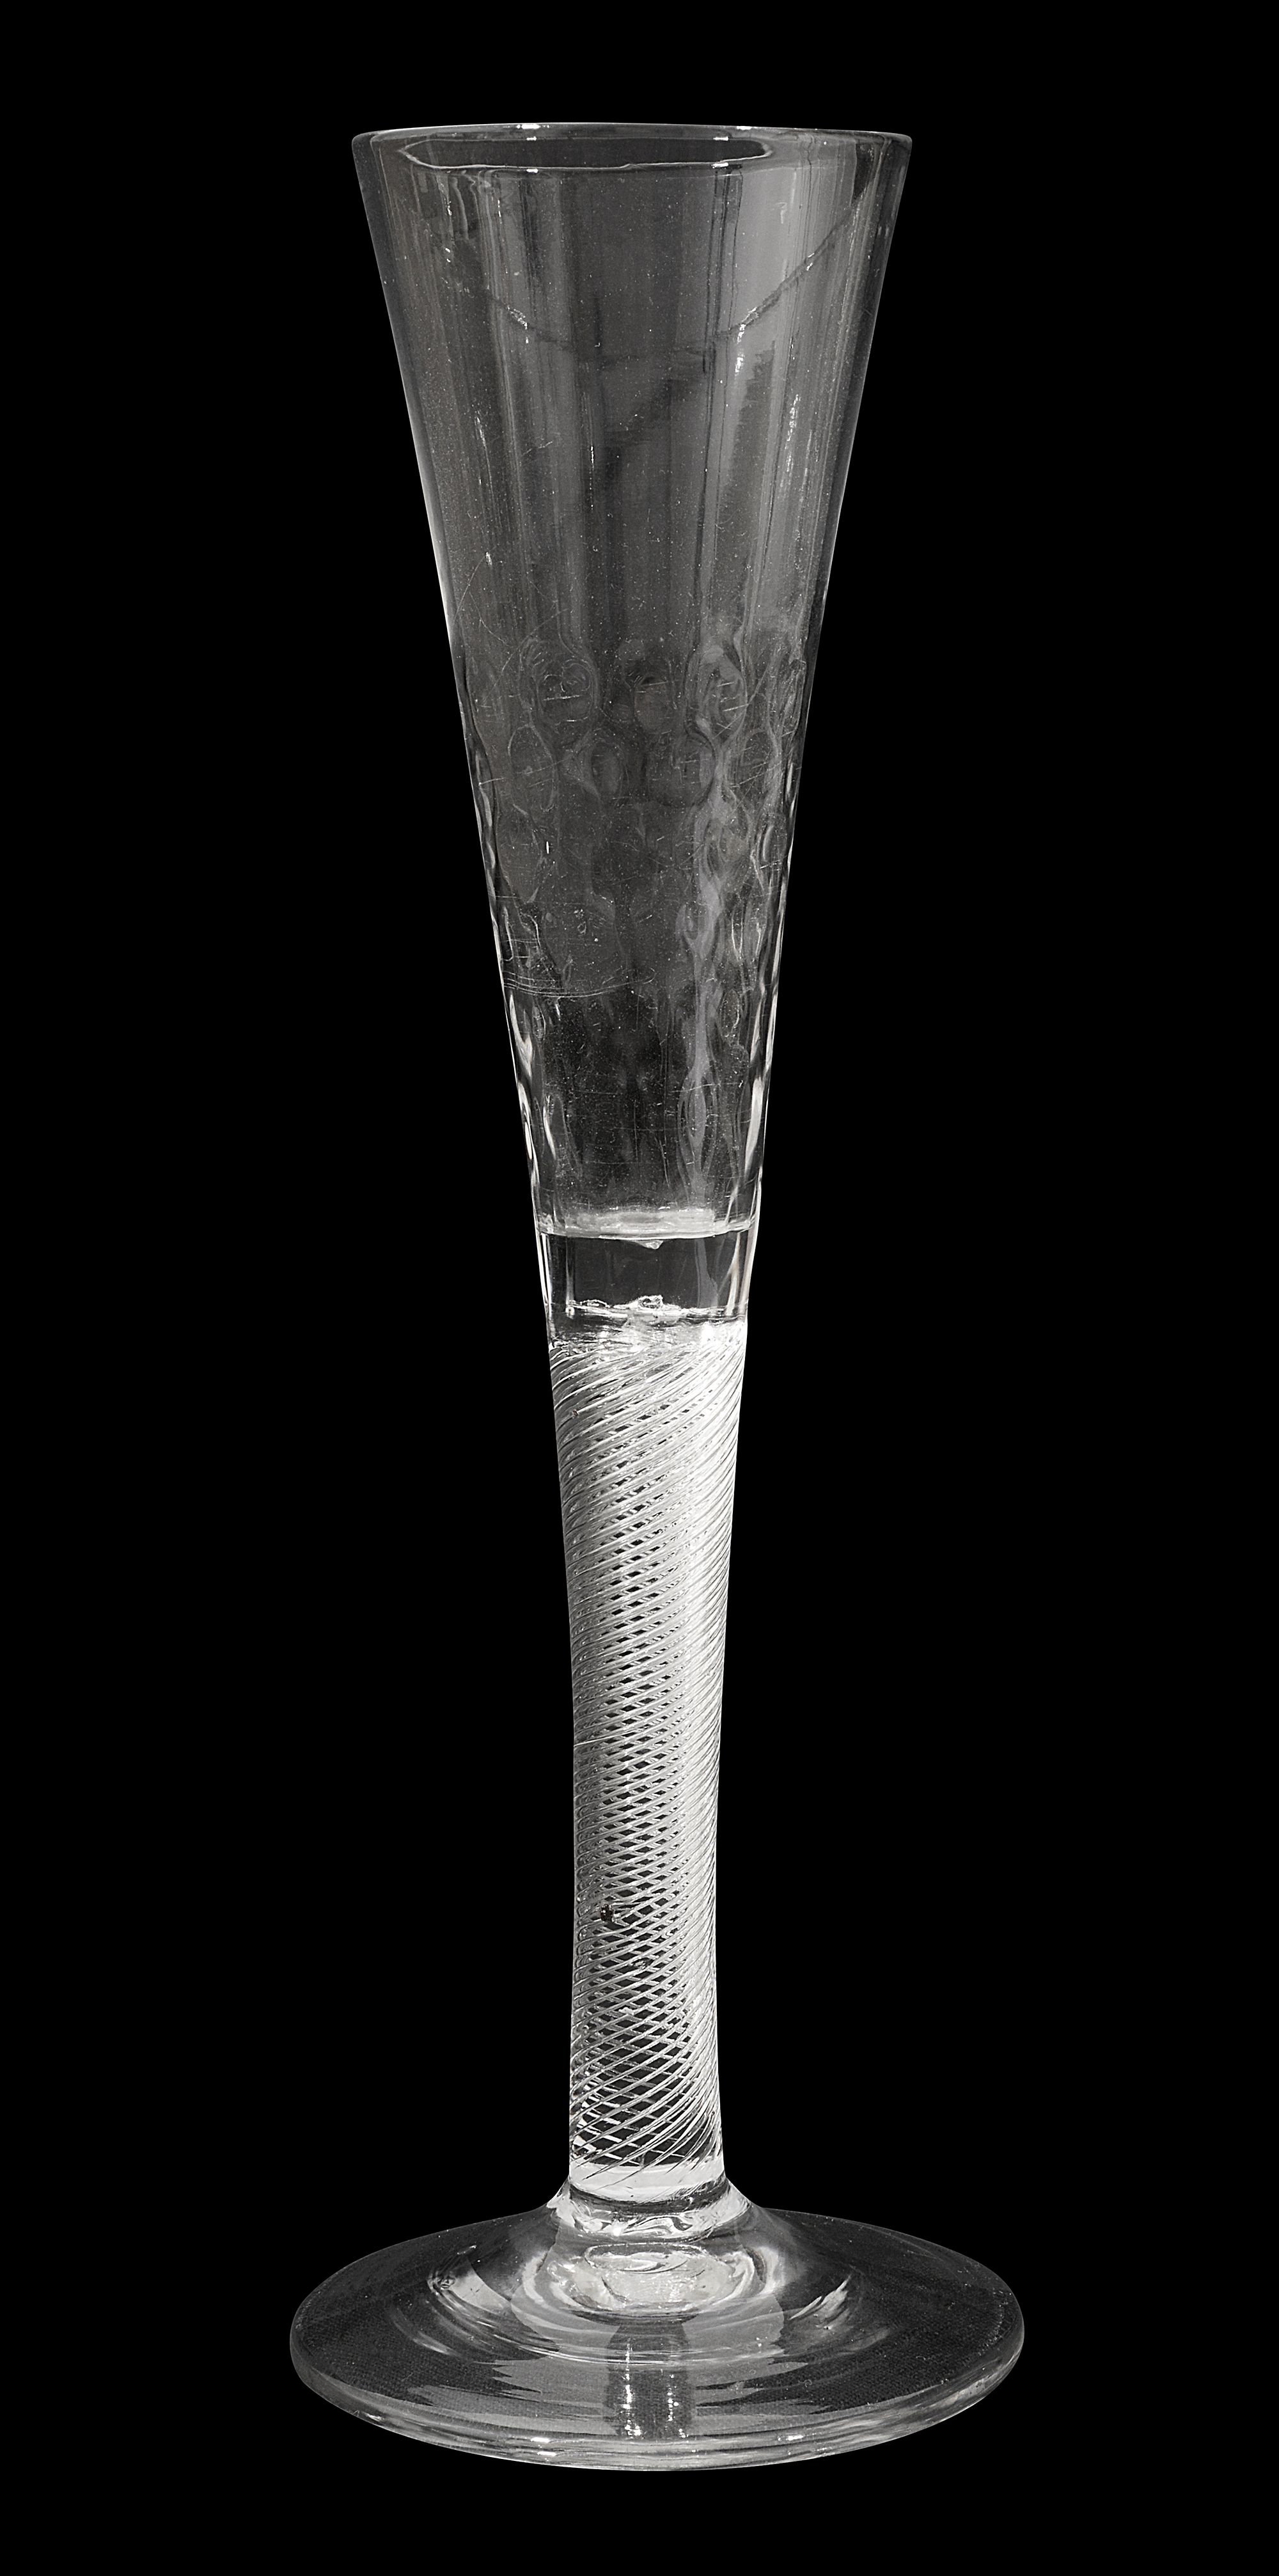 An 18th century airtwist ratafia glass or flute